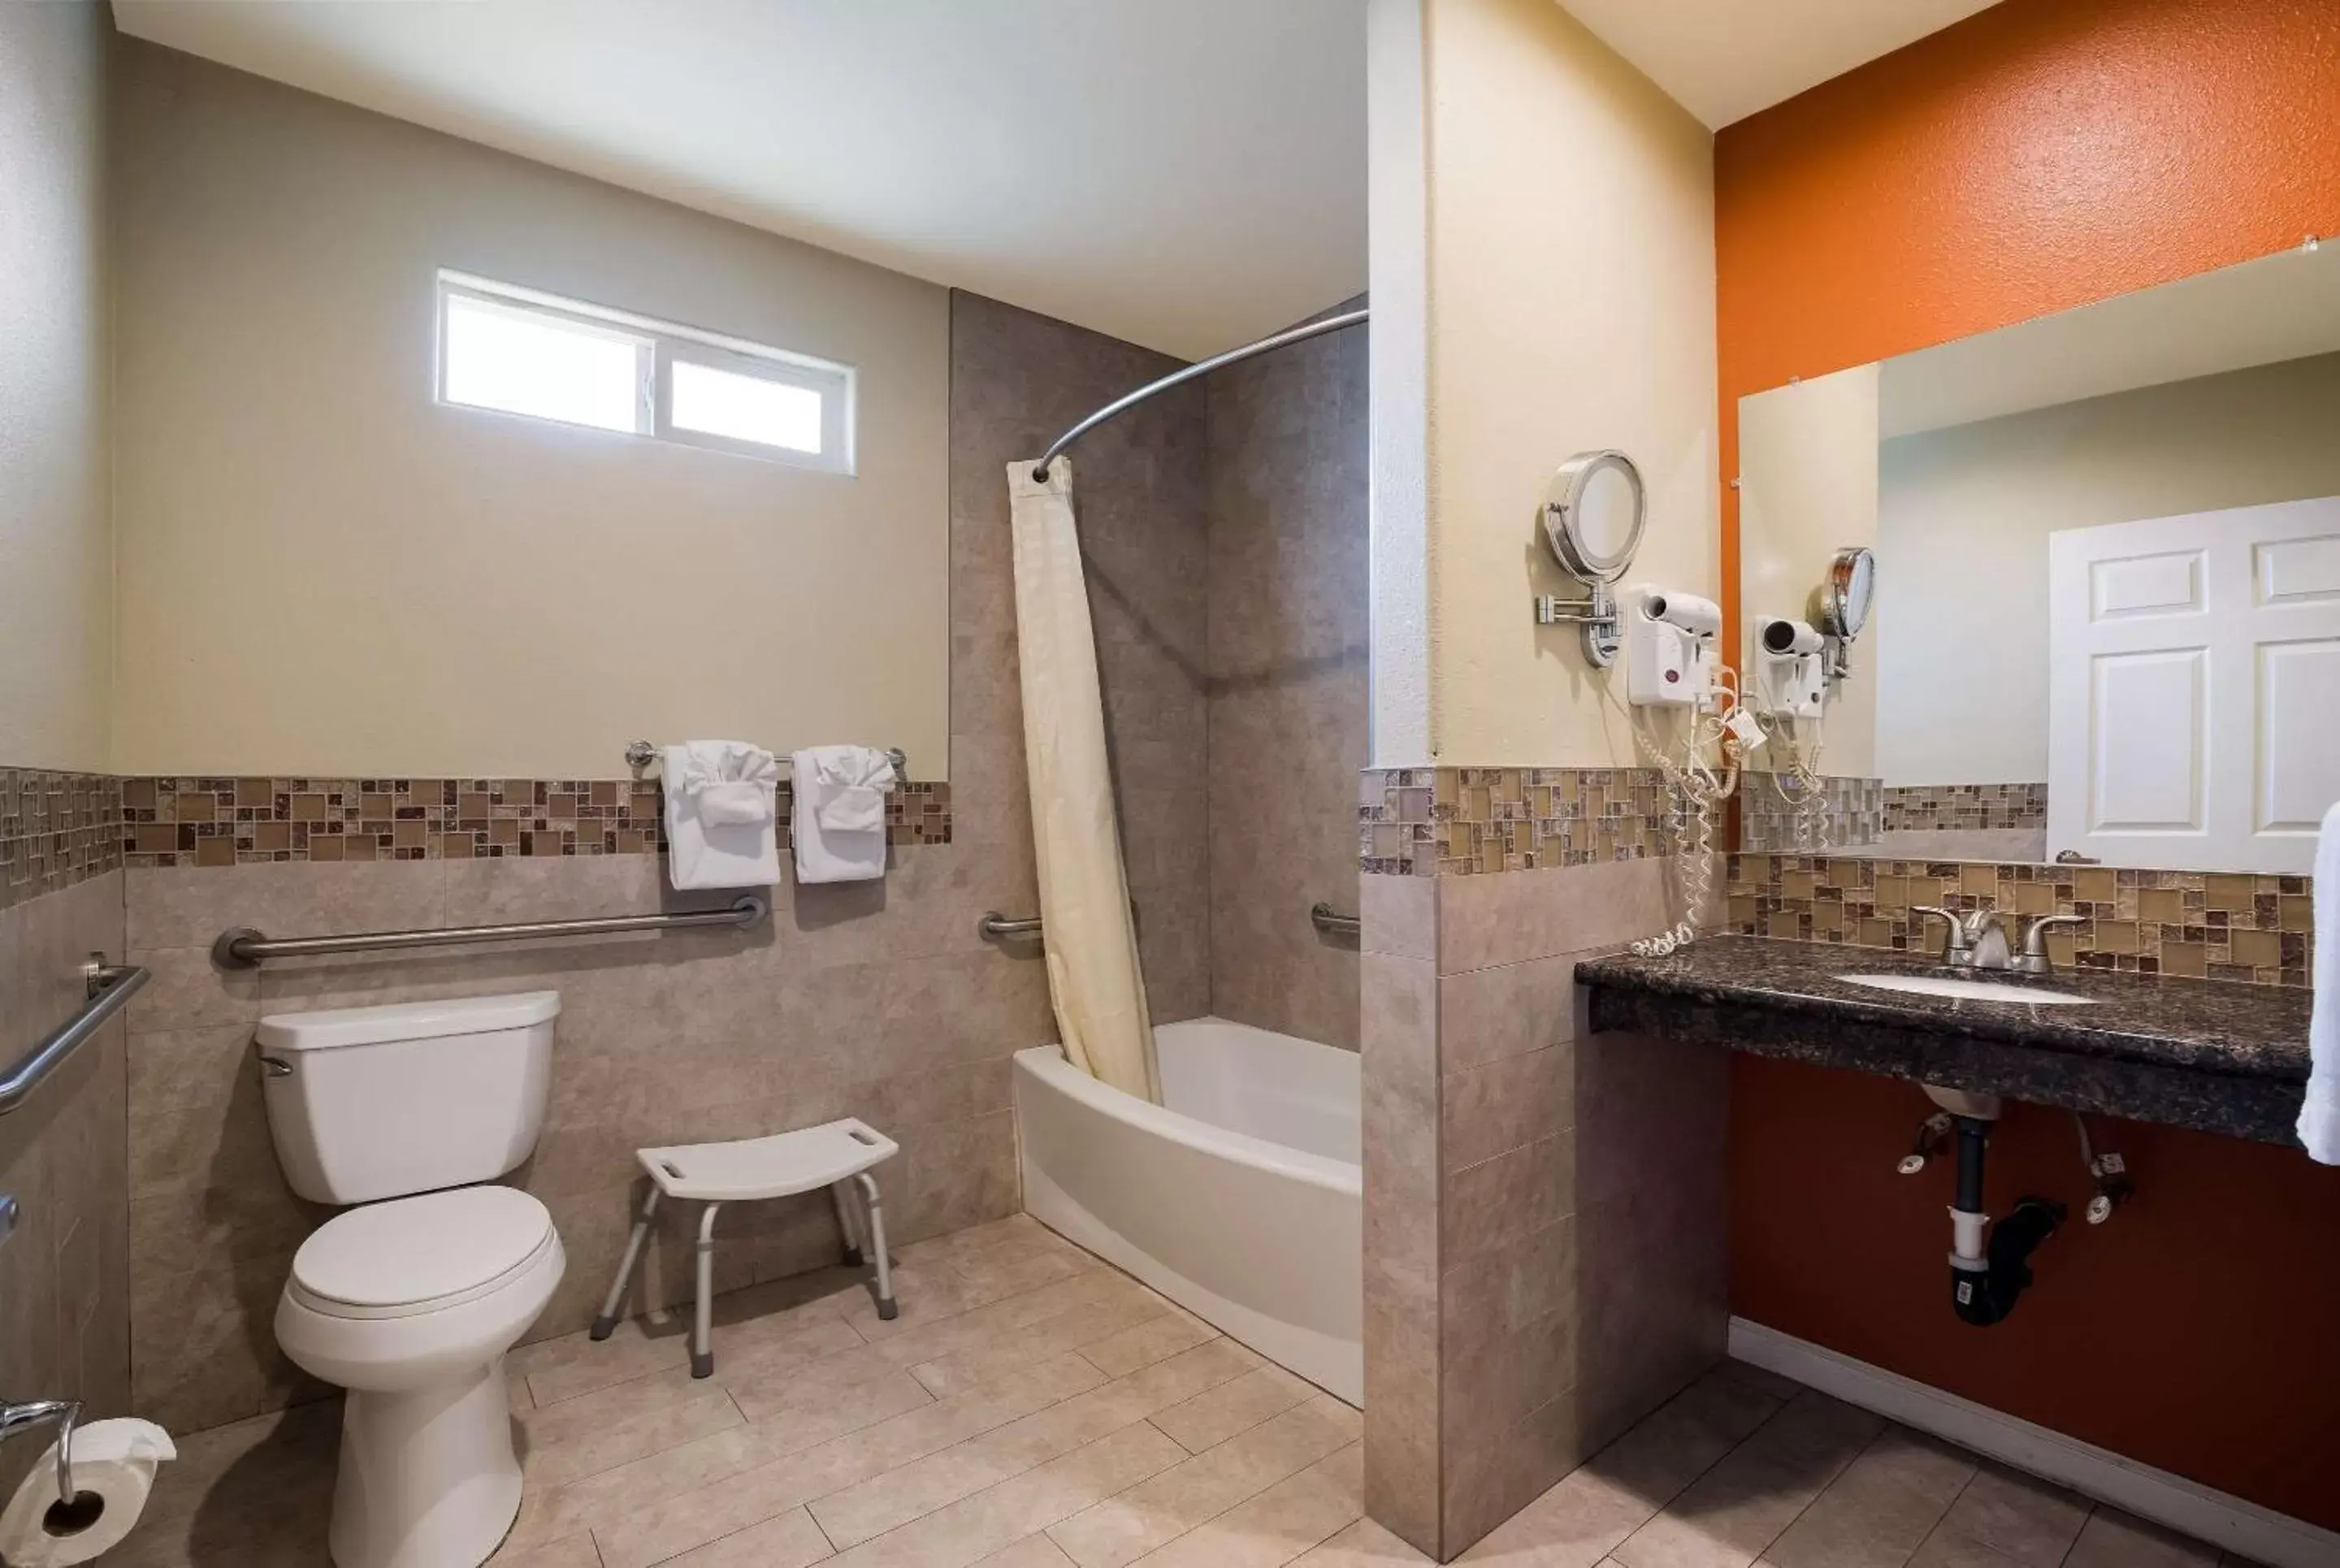 Shower, Bathroom in Rodeway Inn near Coachella